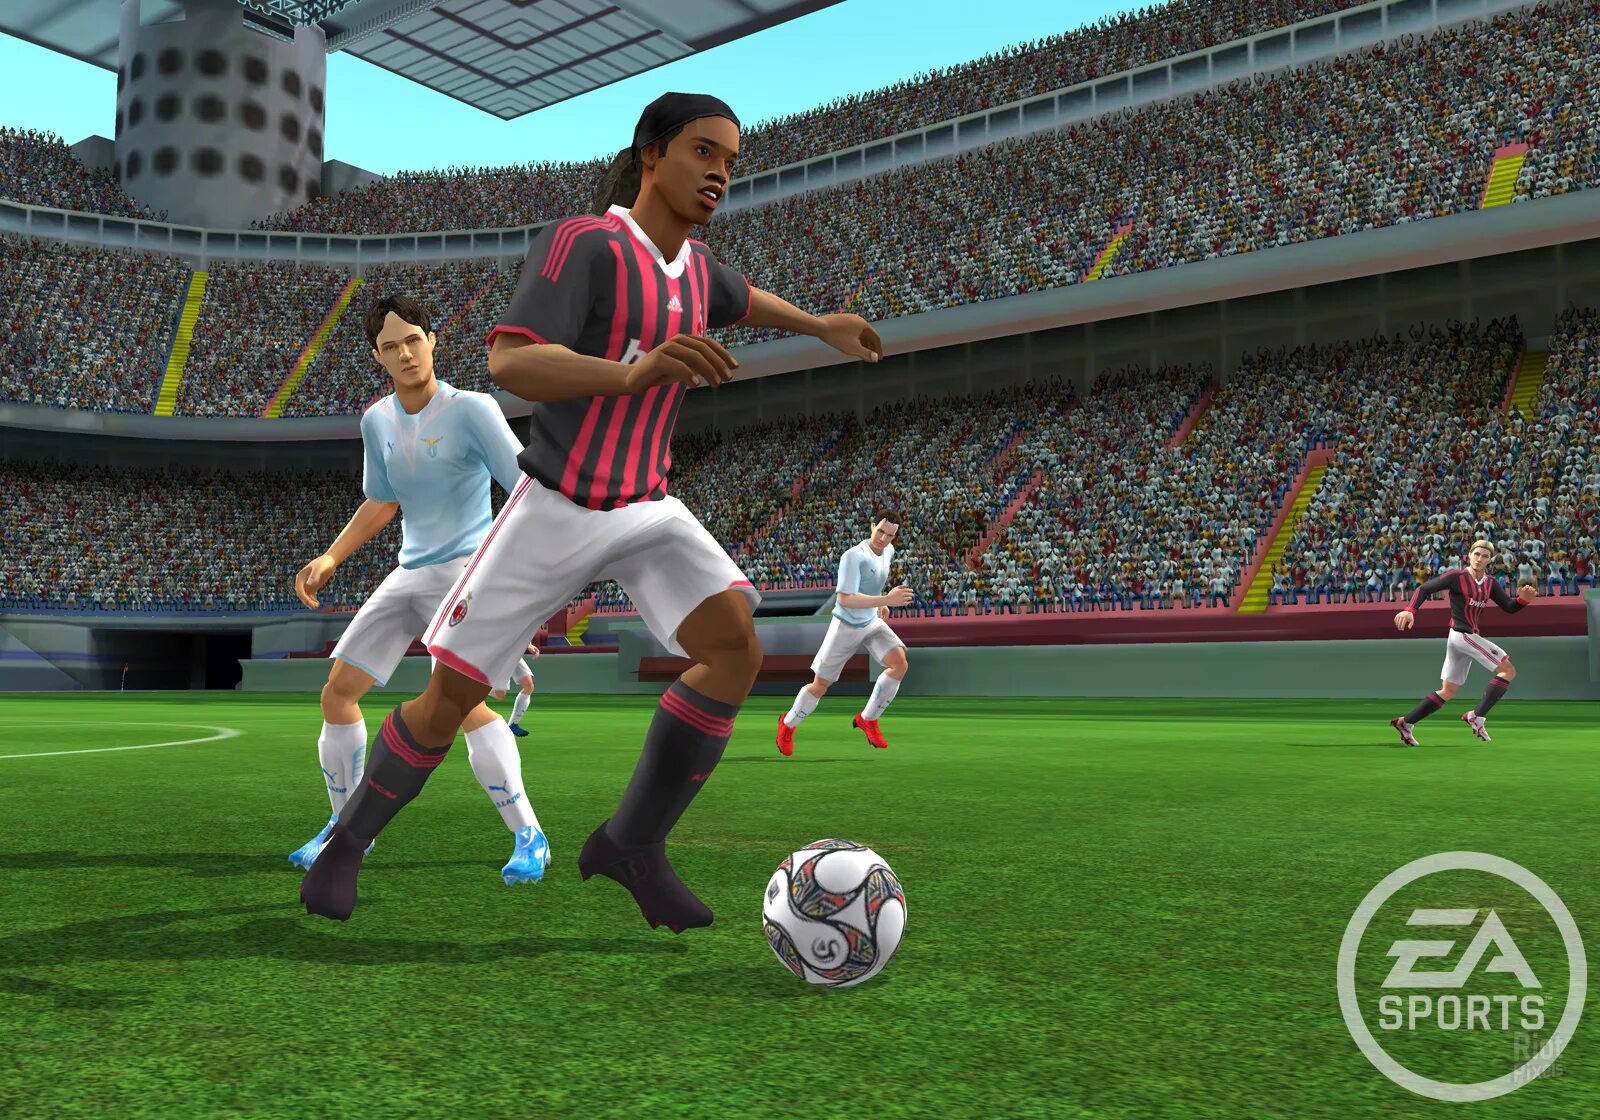 Fifa бесплатная версия. FIFA Soccer 10. FIFA 2010 PC. FIFA 2010 ps3. FIFA 10 (PSP).